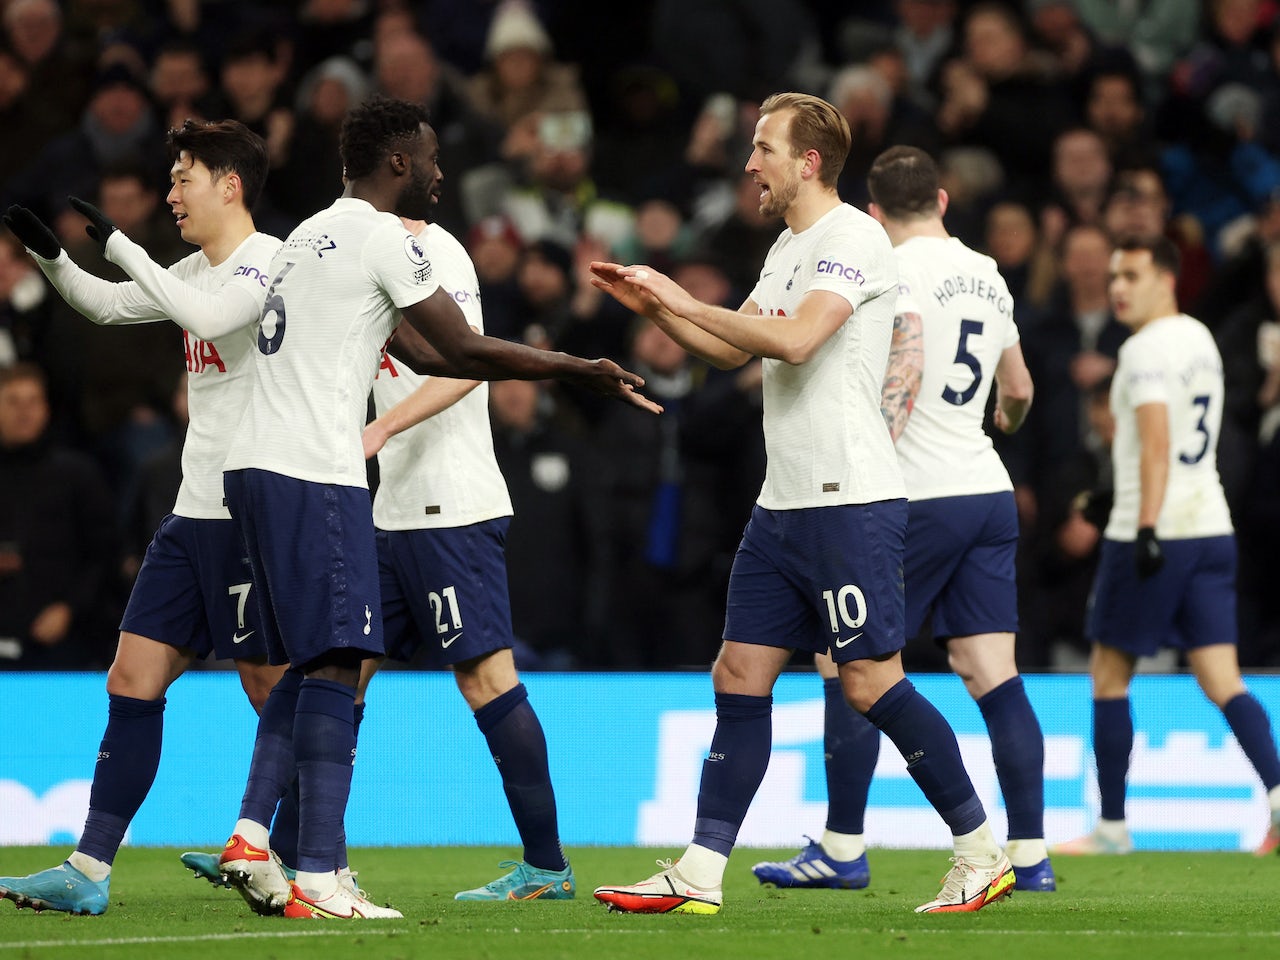 Tottenham Hotspur 5-0 Everton - highlights, man of the match, stats